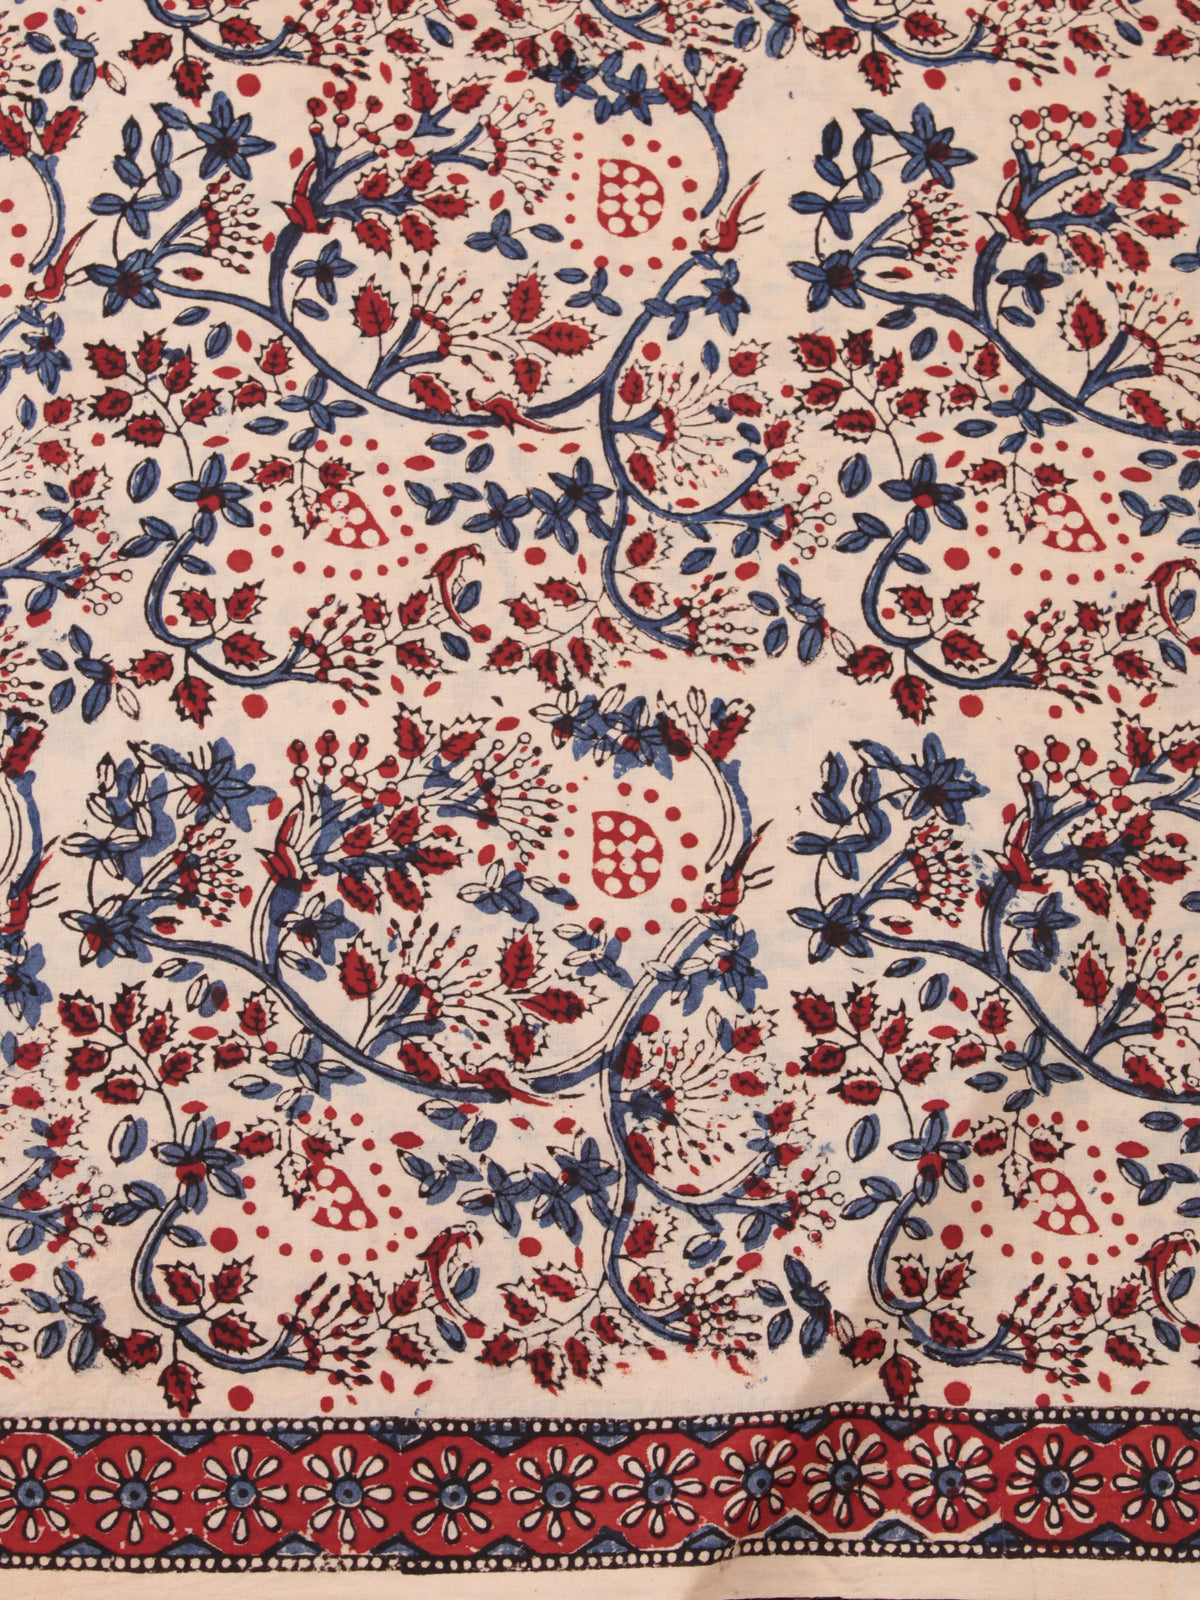 OffWhite Red Indigo Hand Block Printed Cotton Fabric Per Meter - F001F2467